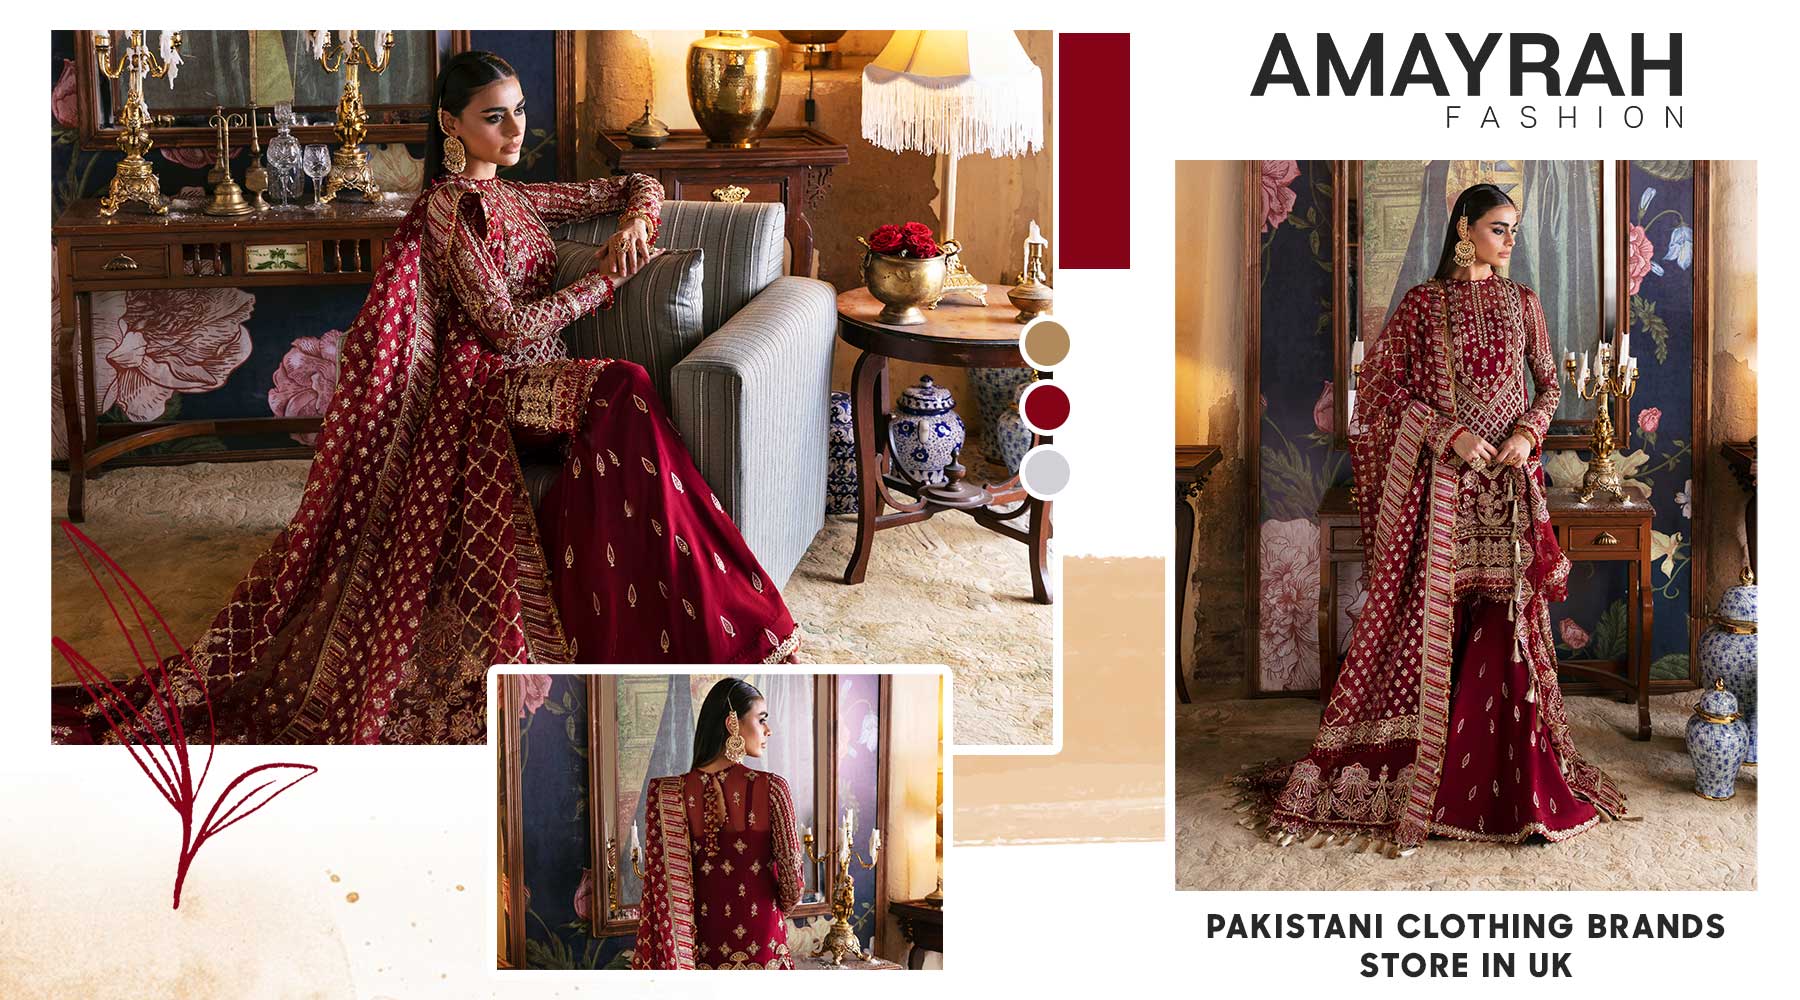 Discovering Pakistani Fashion in the UK: Amayrah Fashion